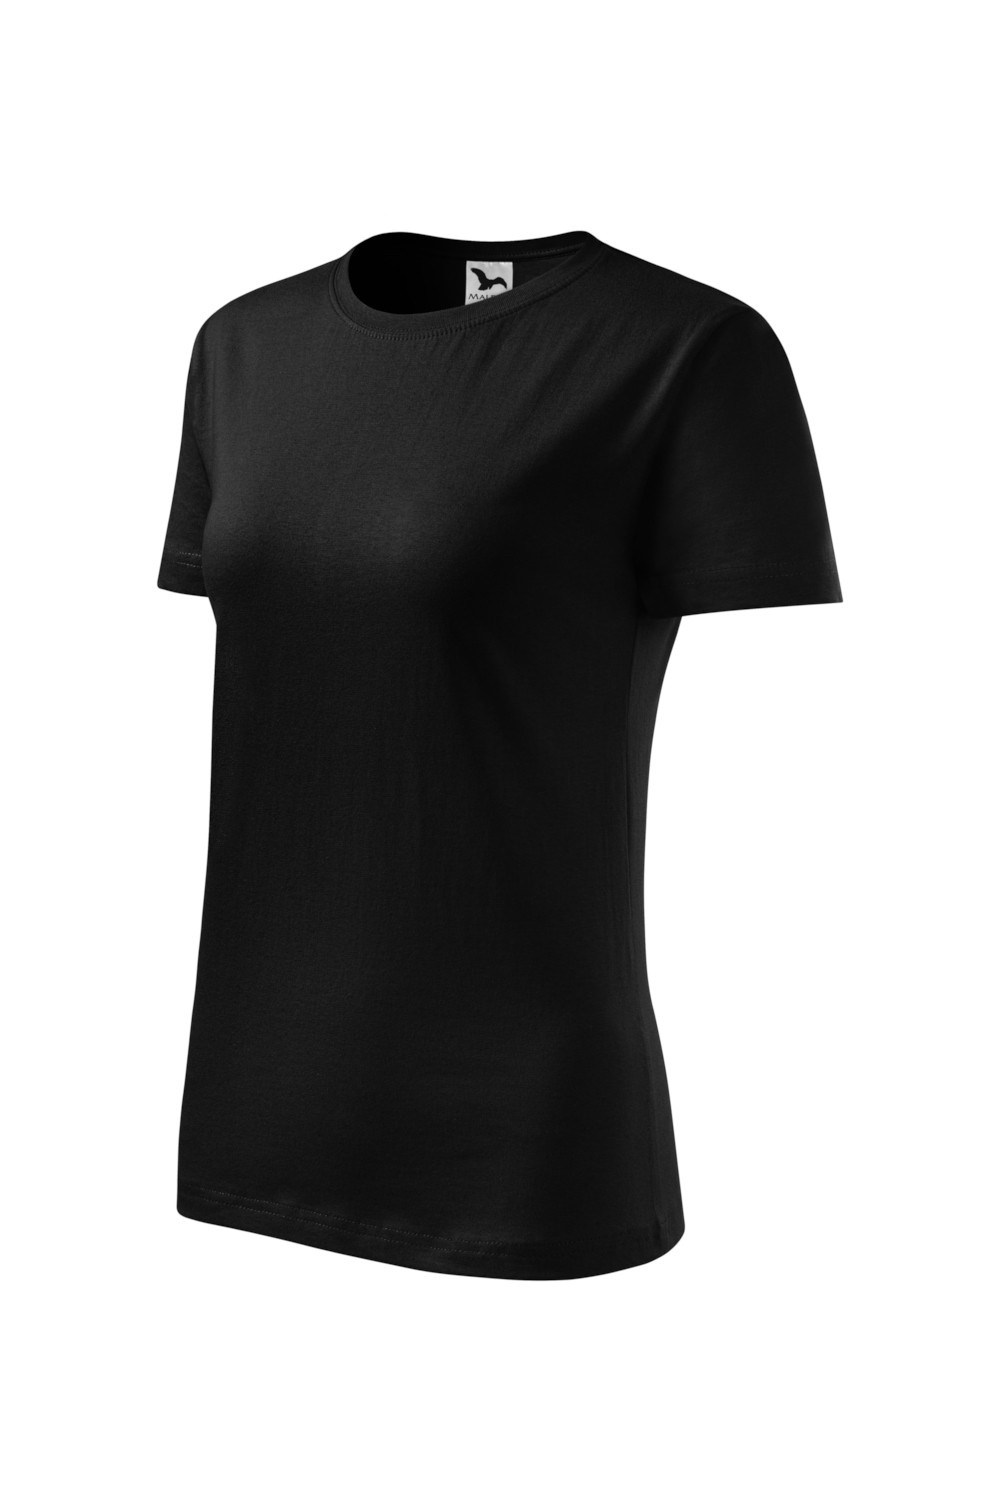 CLASSIC 133 MALFINI Koszulka damska 100% bawełna t-shirt czarny